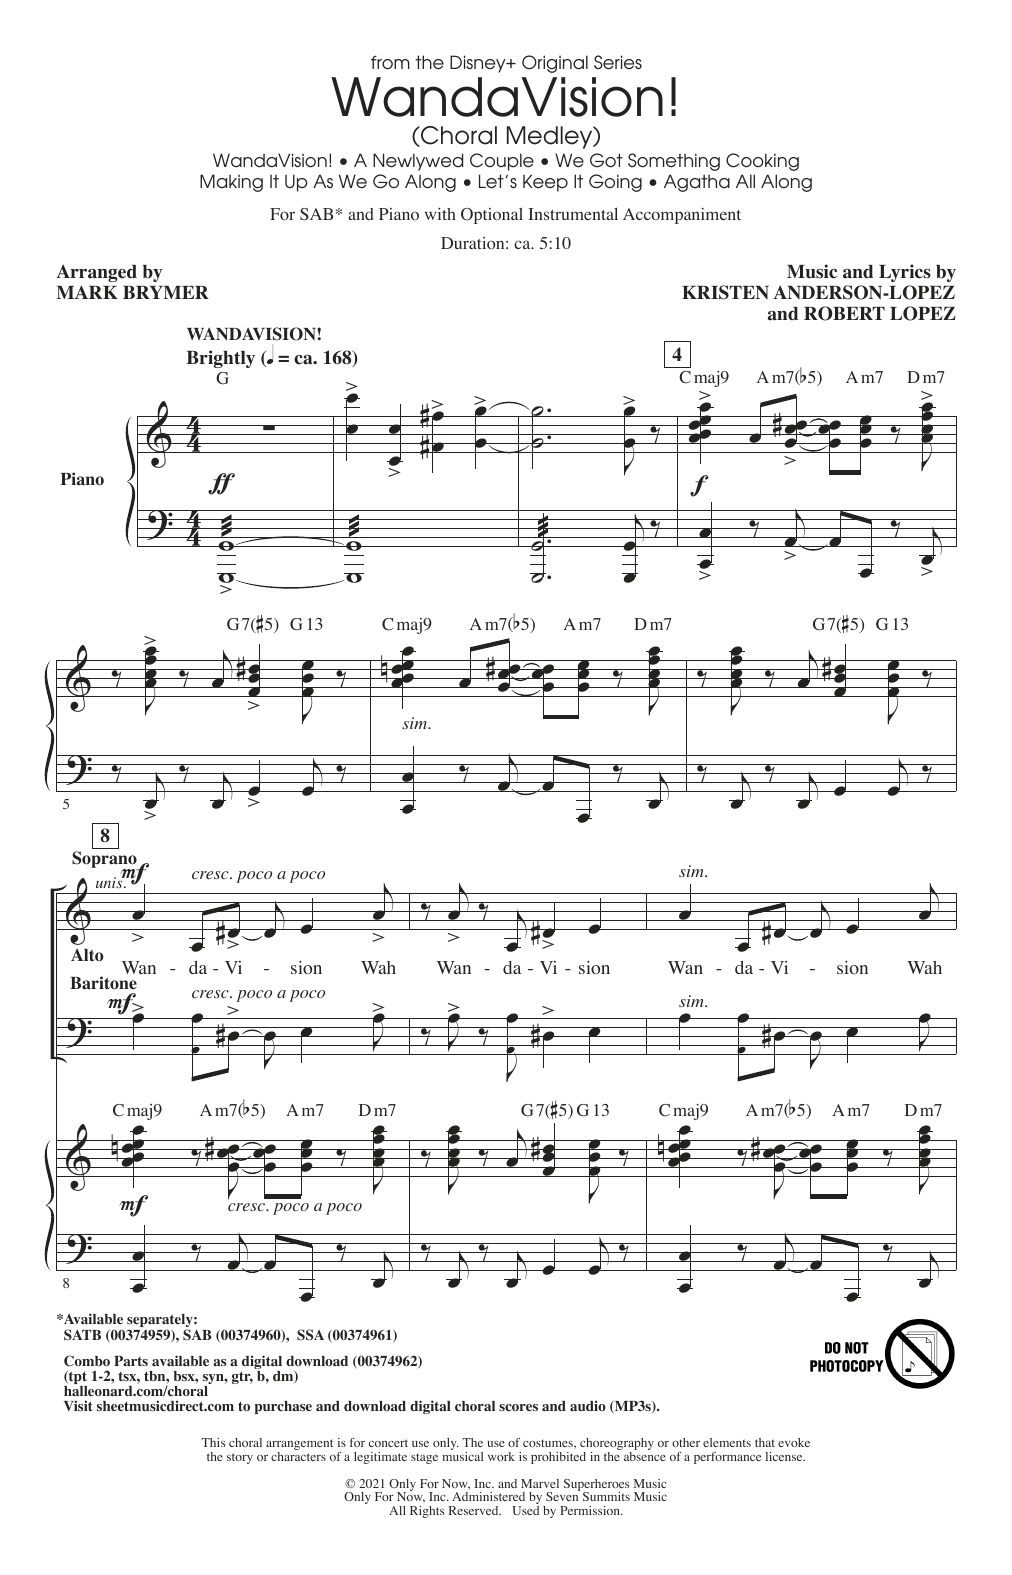 Kristen Anderson-Lopez & Robert Lopez WandaVision! (Choral Medley) (arr. Mark Brymer) Sheet Music Notes & Chords for SAB Choir - Download or Print PDF